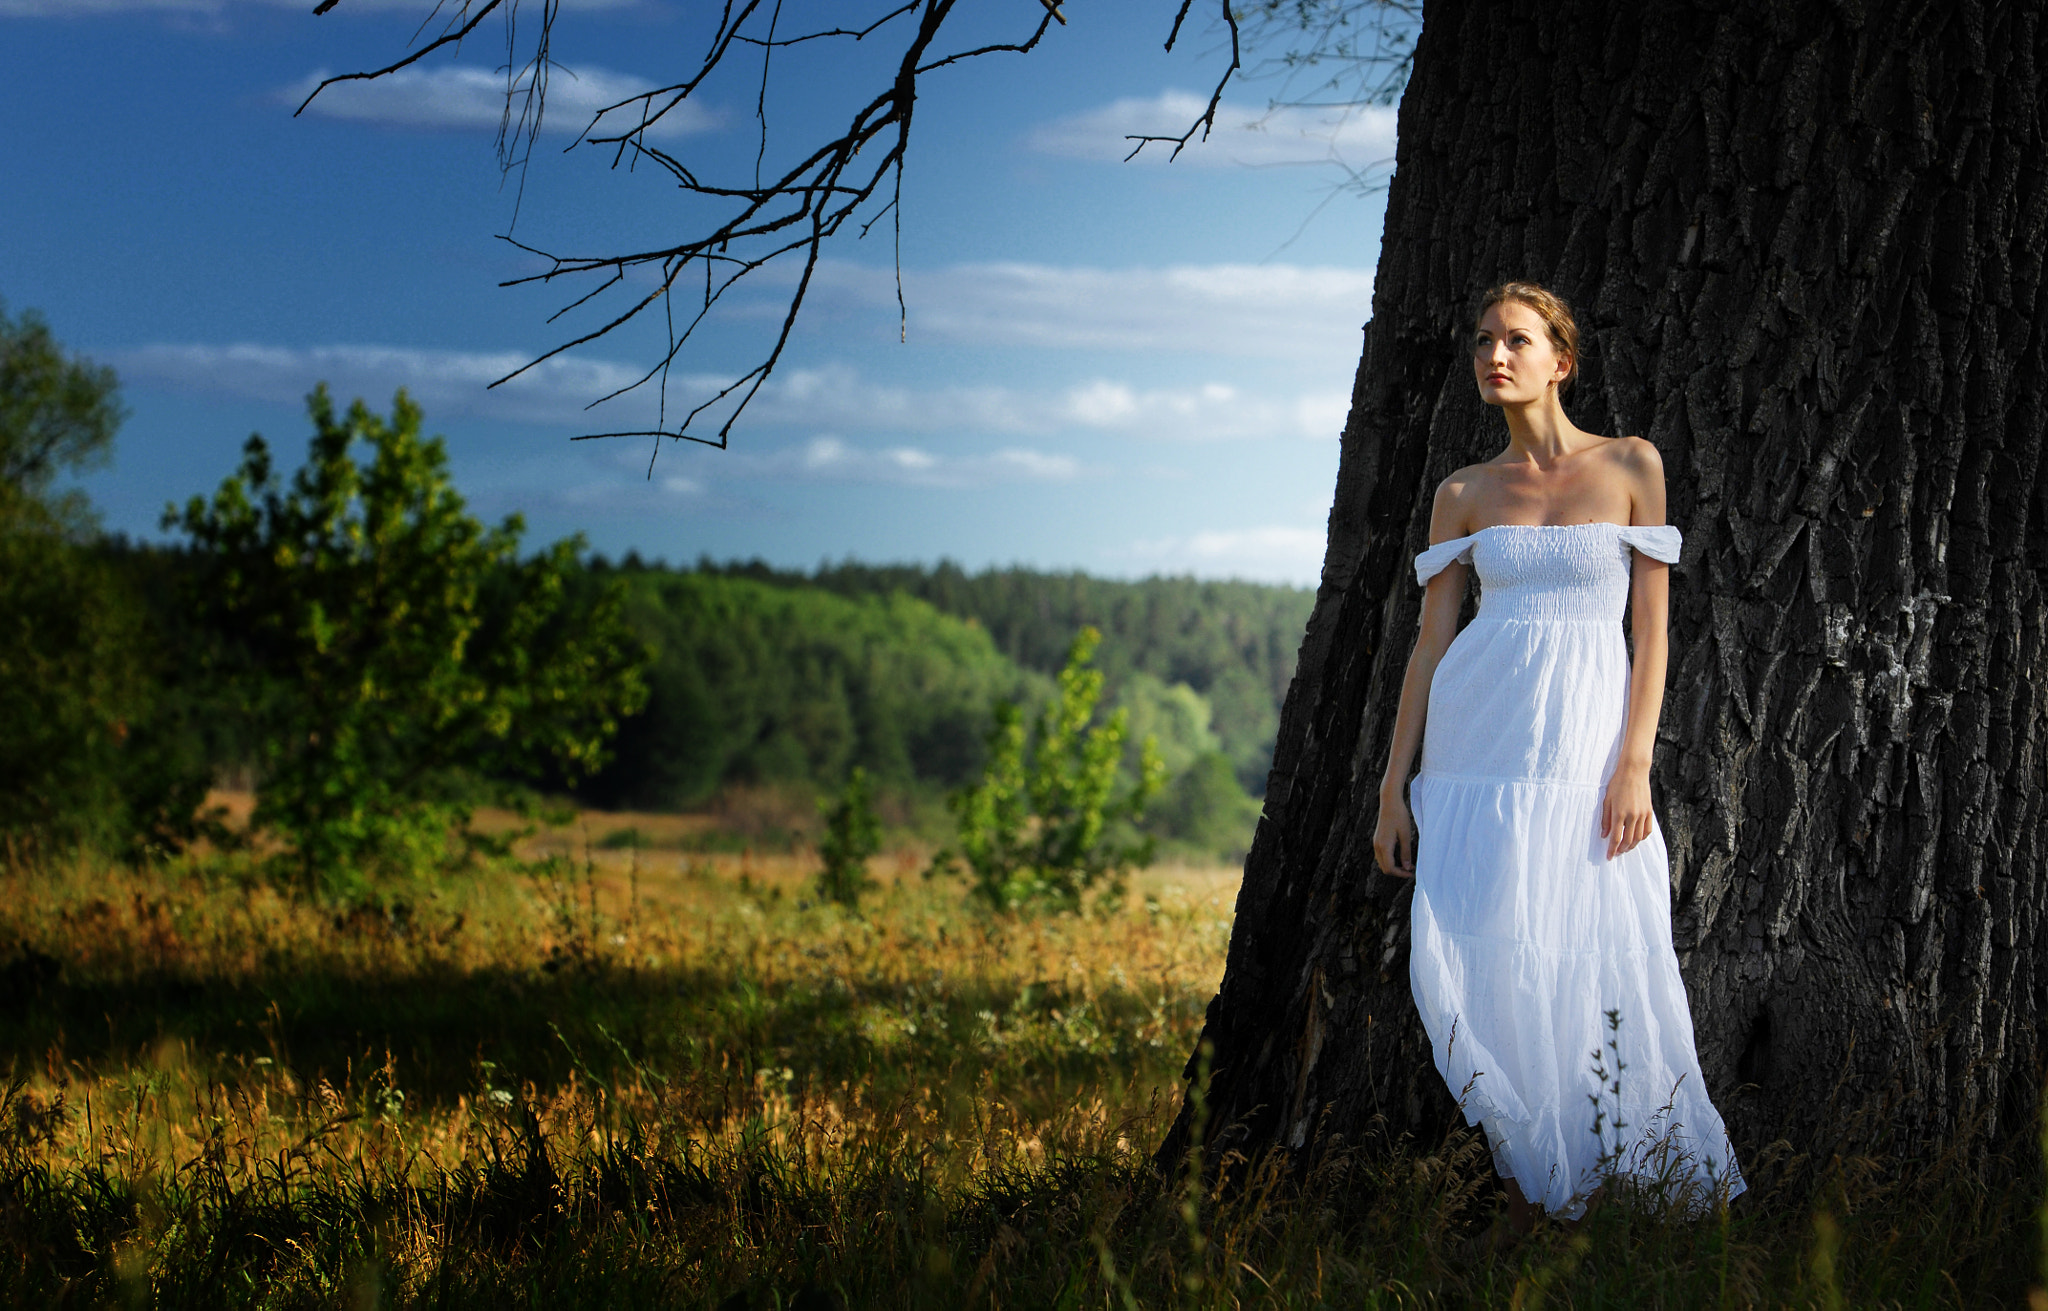 Girl under the open sky, Model in a white summer dress.